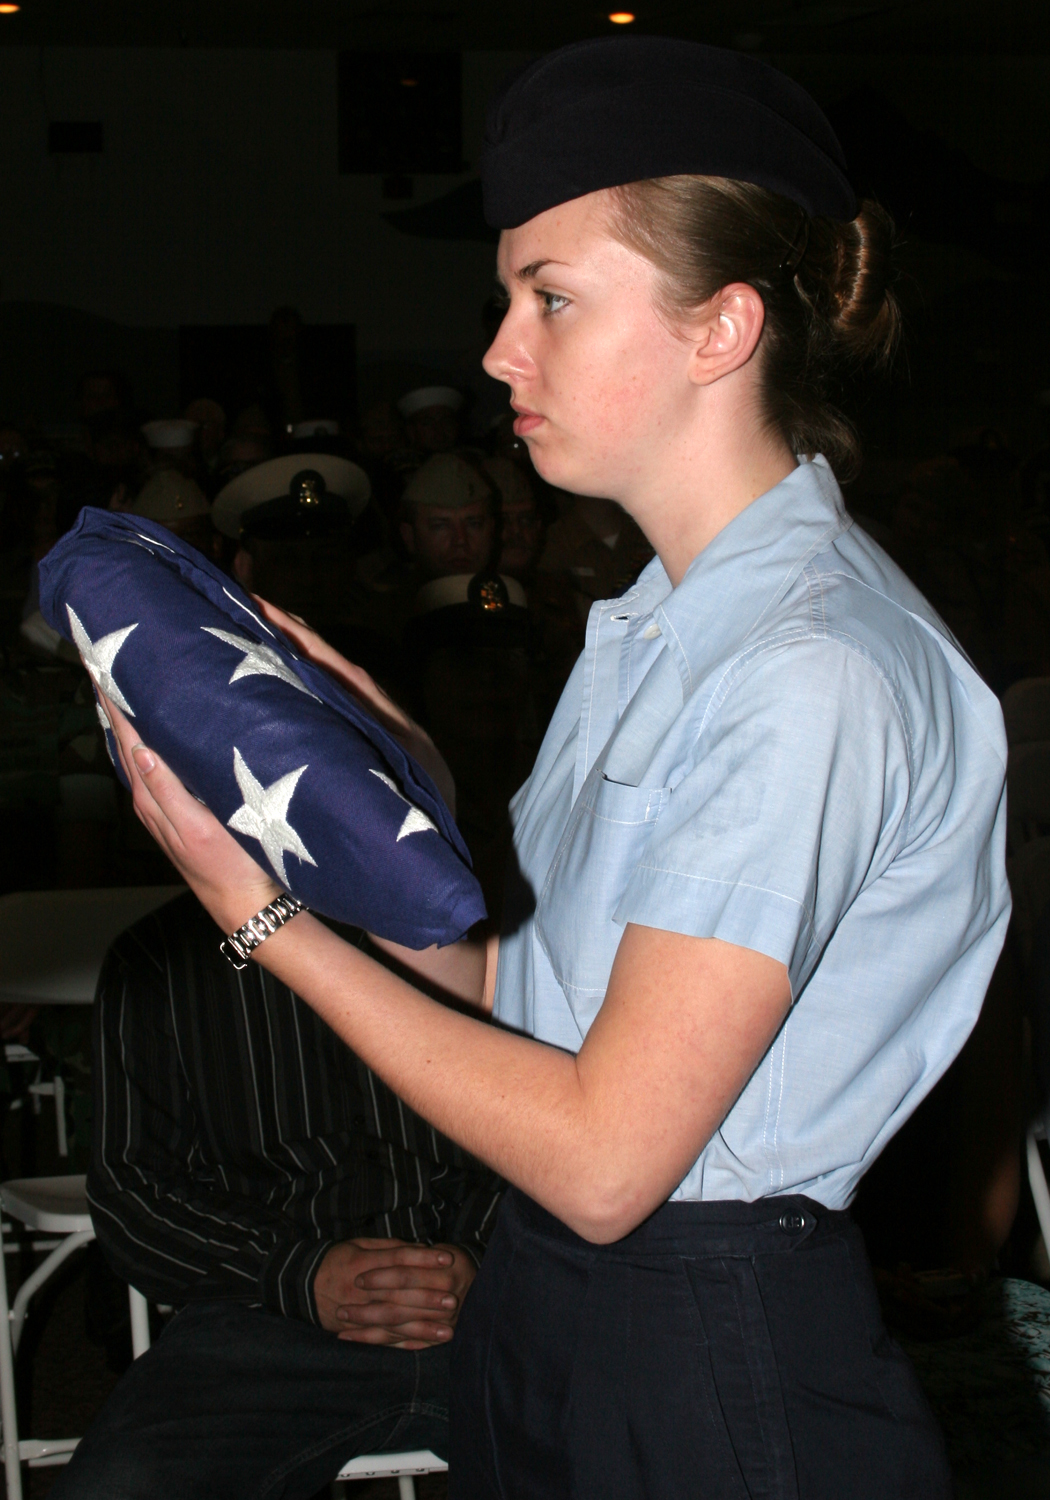 Retirement Ceremony at Naval Hospital in Bremerton, Washington in 2008.